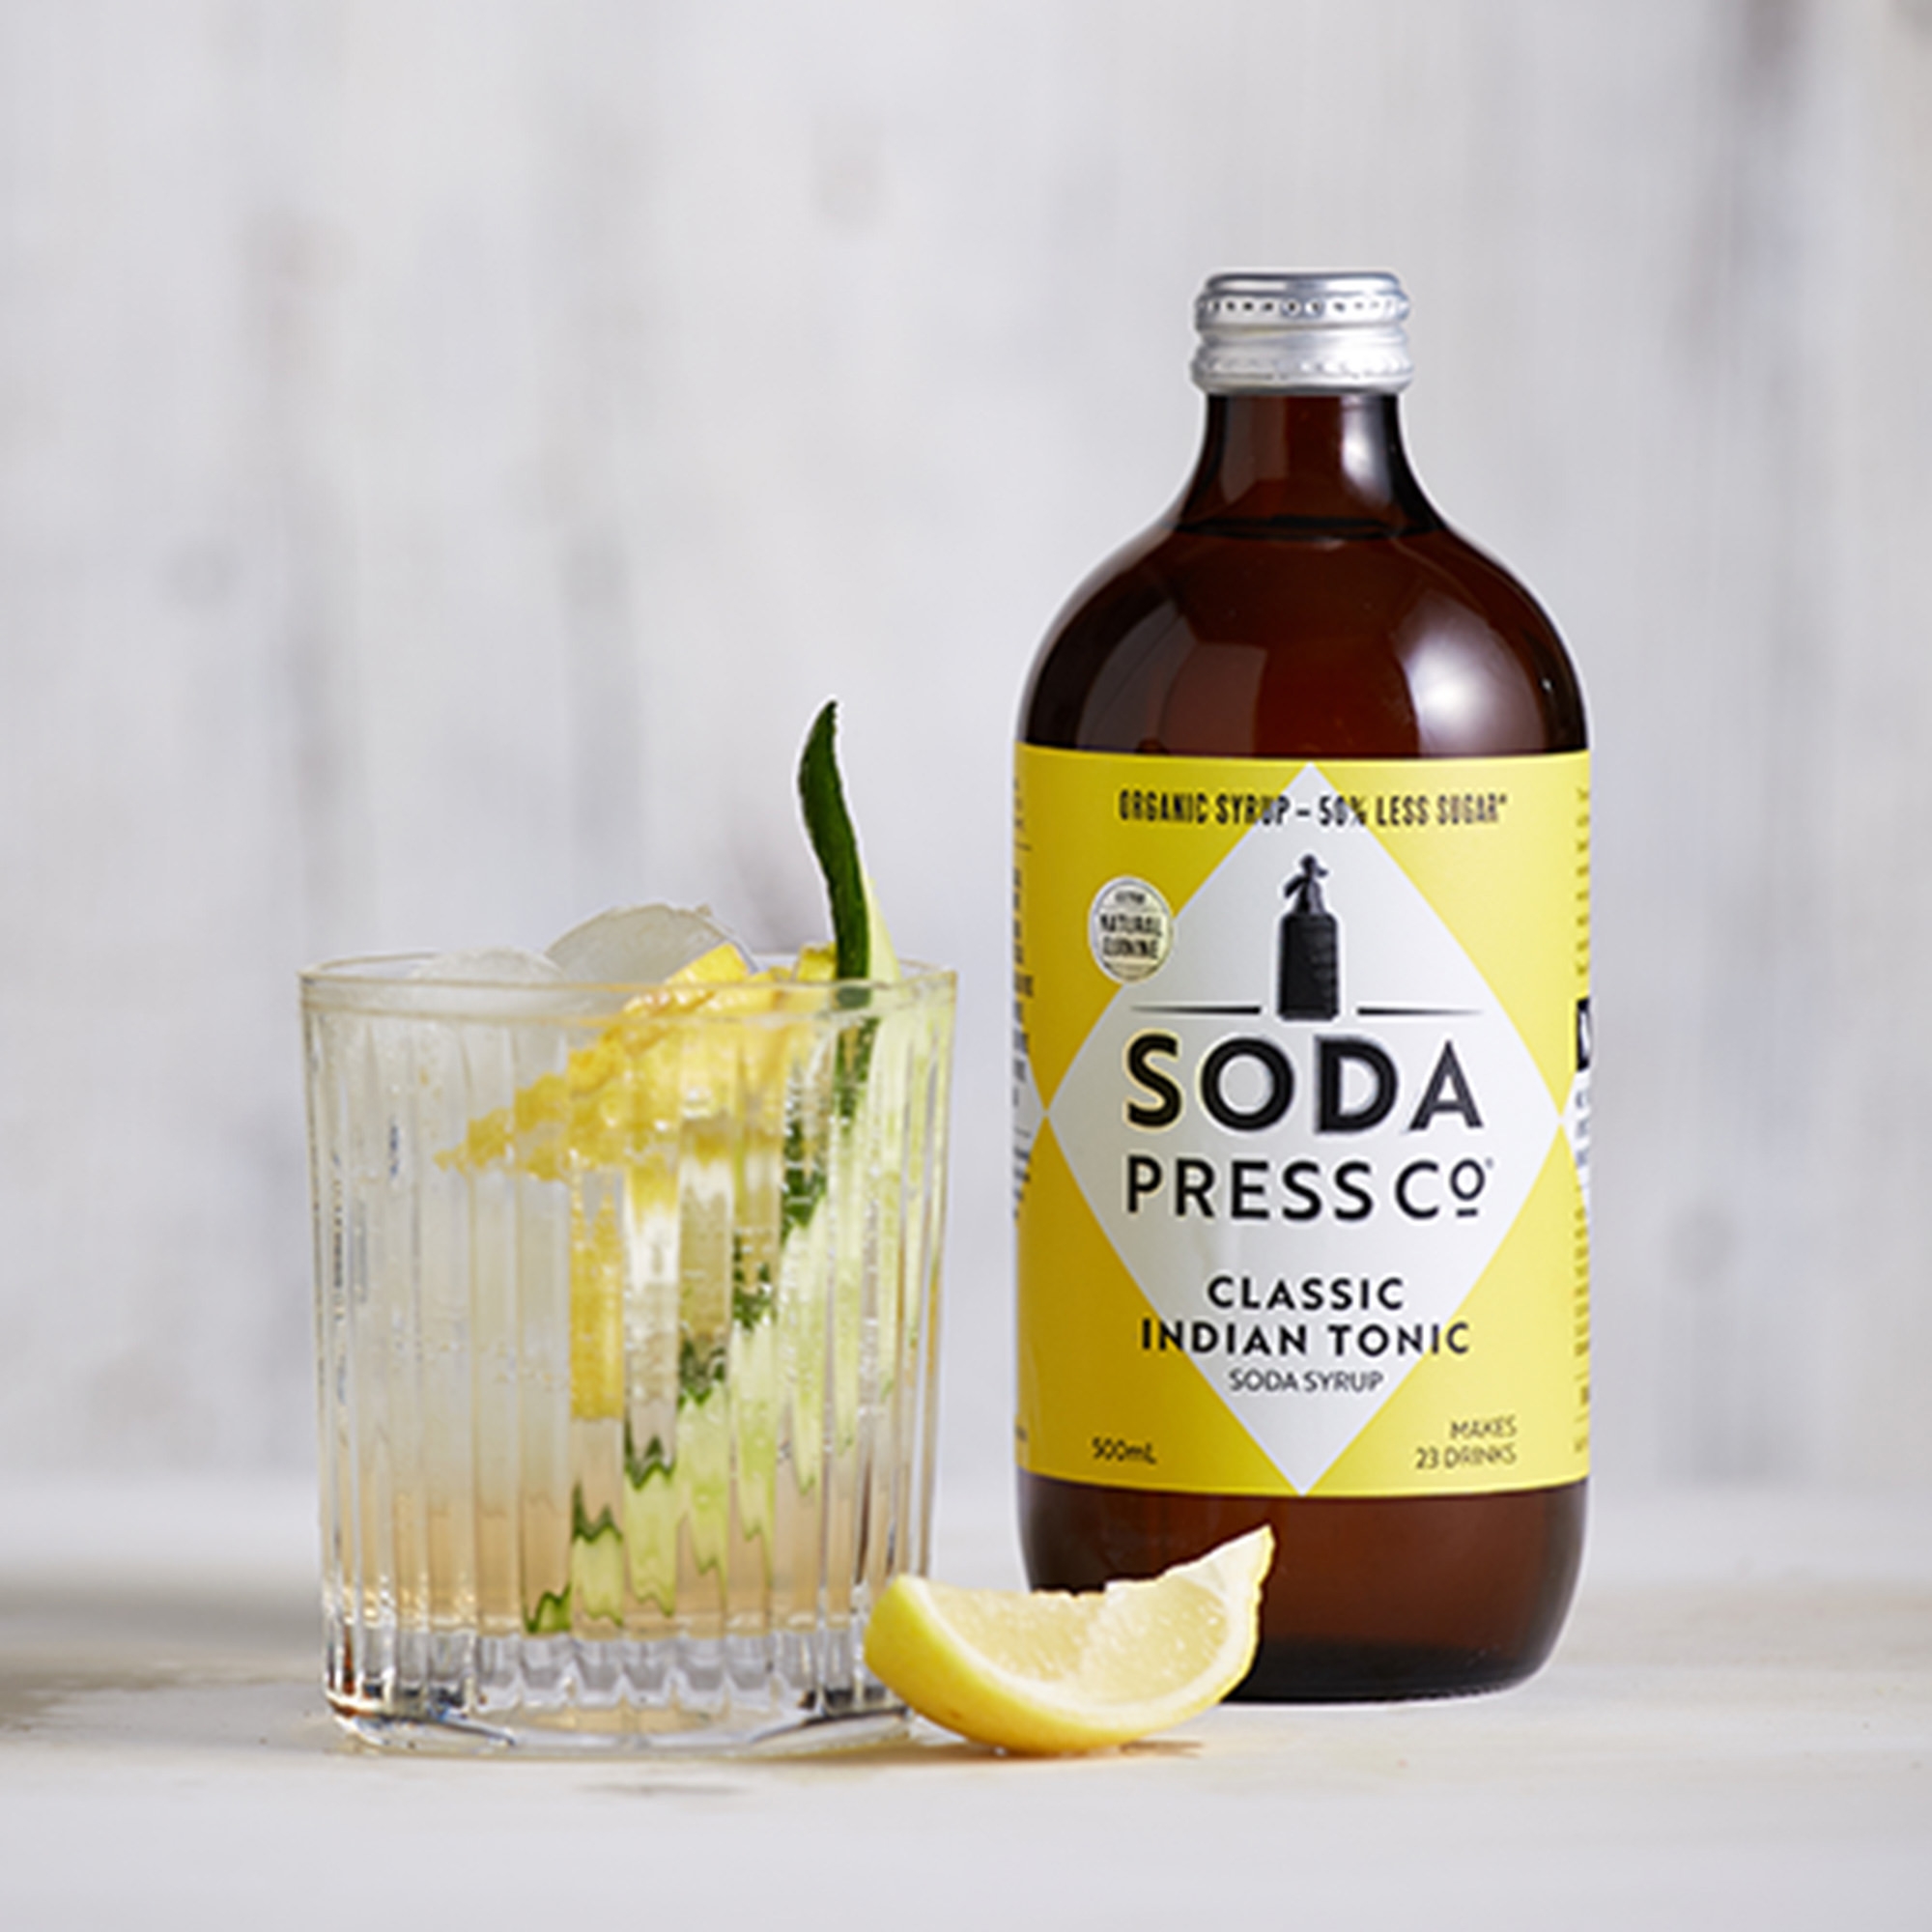 SodaStream Soda Press Co Organic Soda Syrup Indian Tonic Image 2